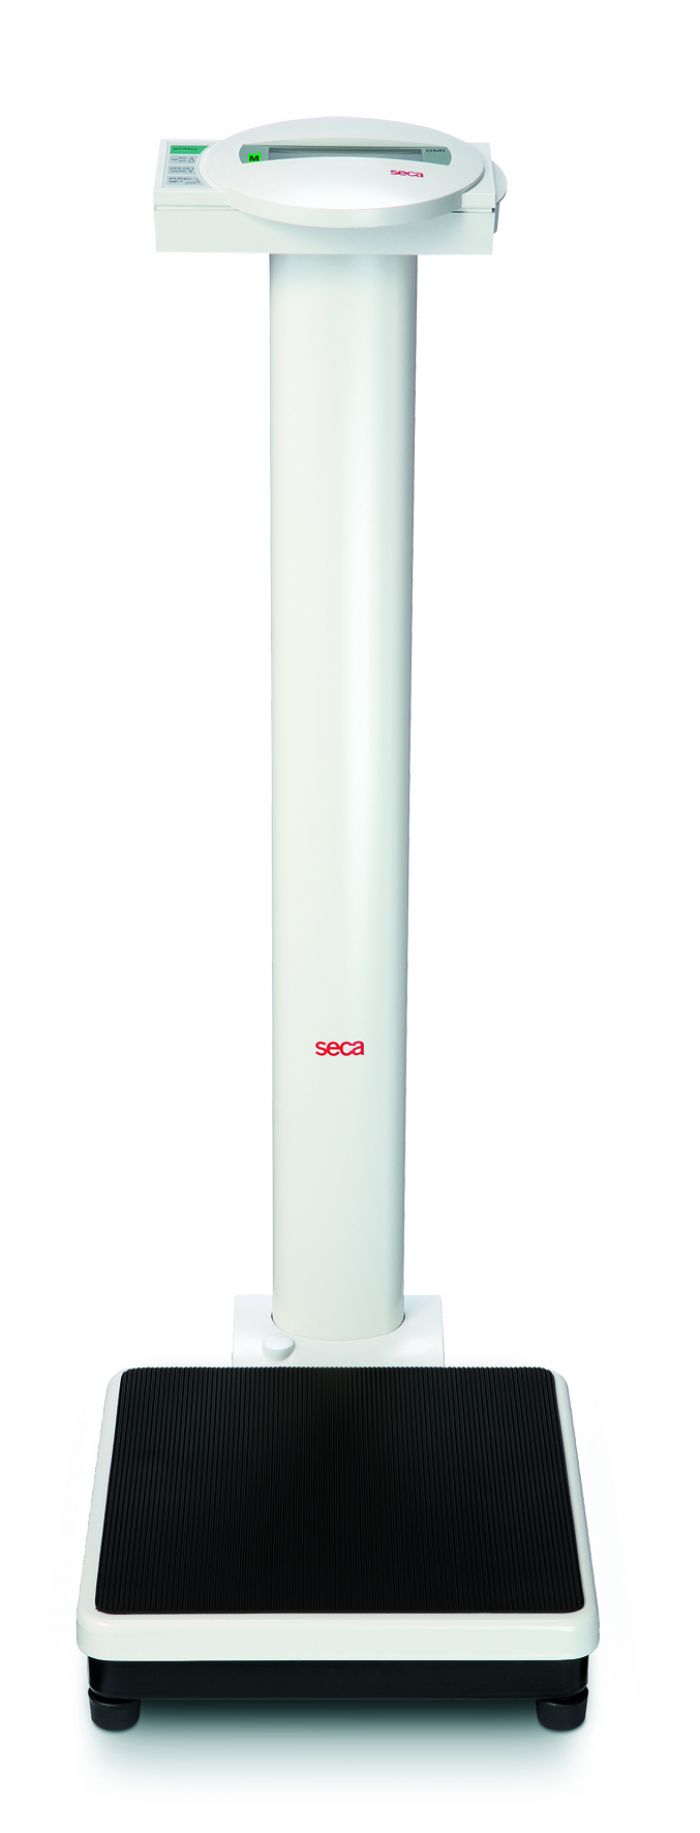 Seca 799 Digital Column Scale - Class III - (inc. Calibration & Verification Fee) - (Single)